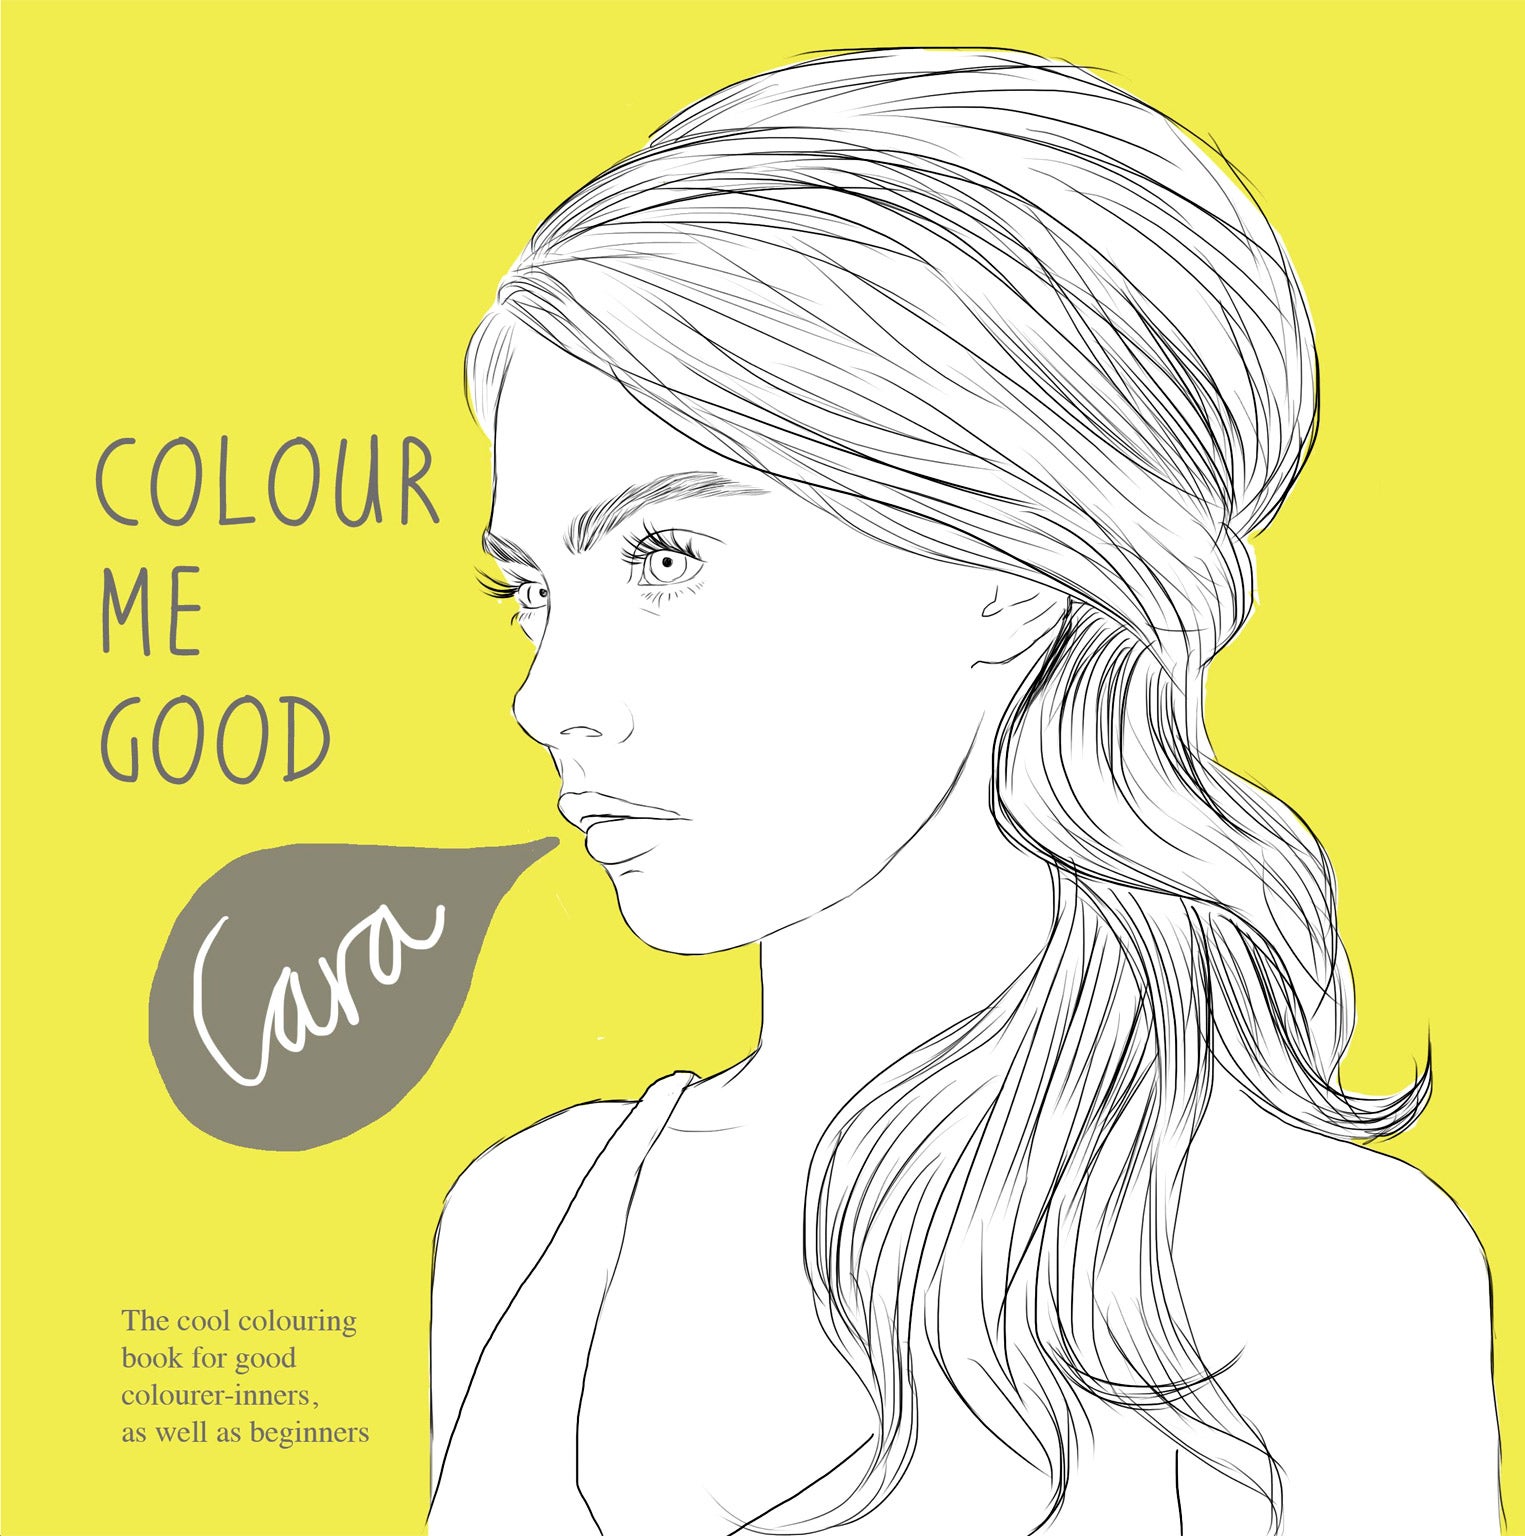 Cara Delevingne's new colouring book, 'Colour Me Good'